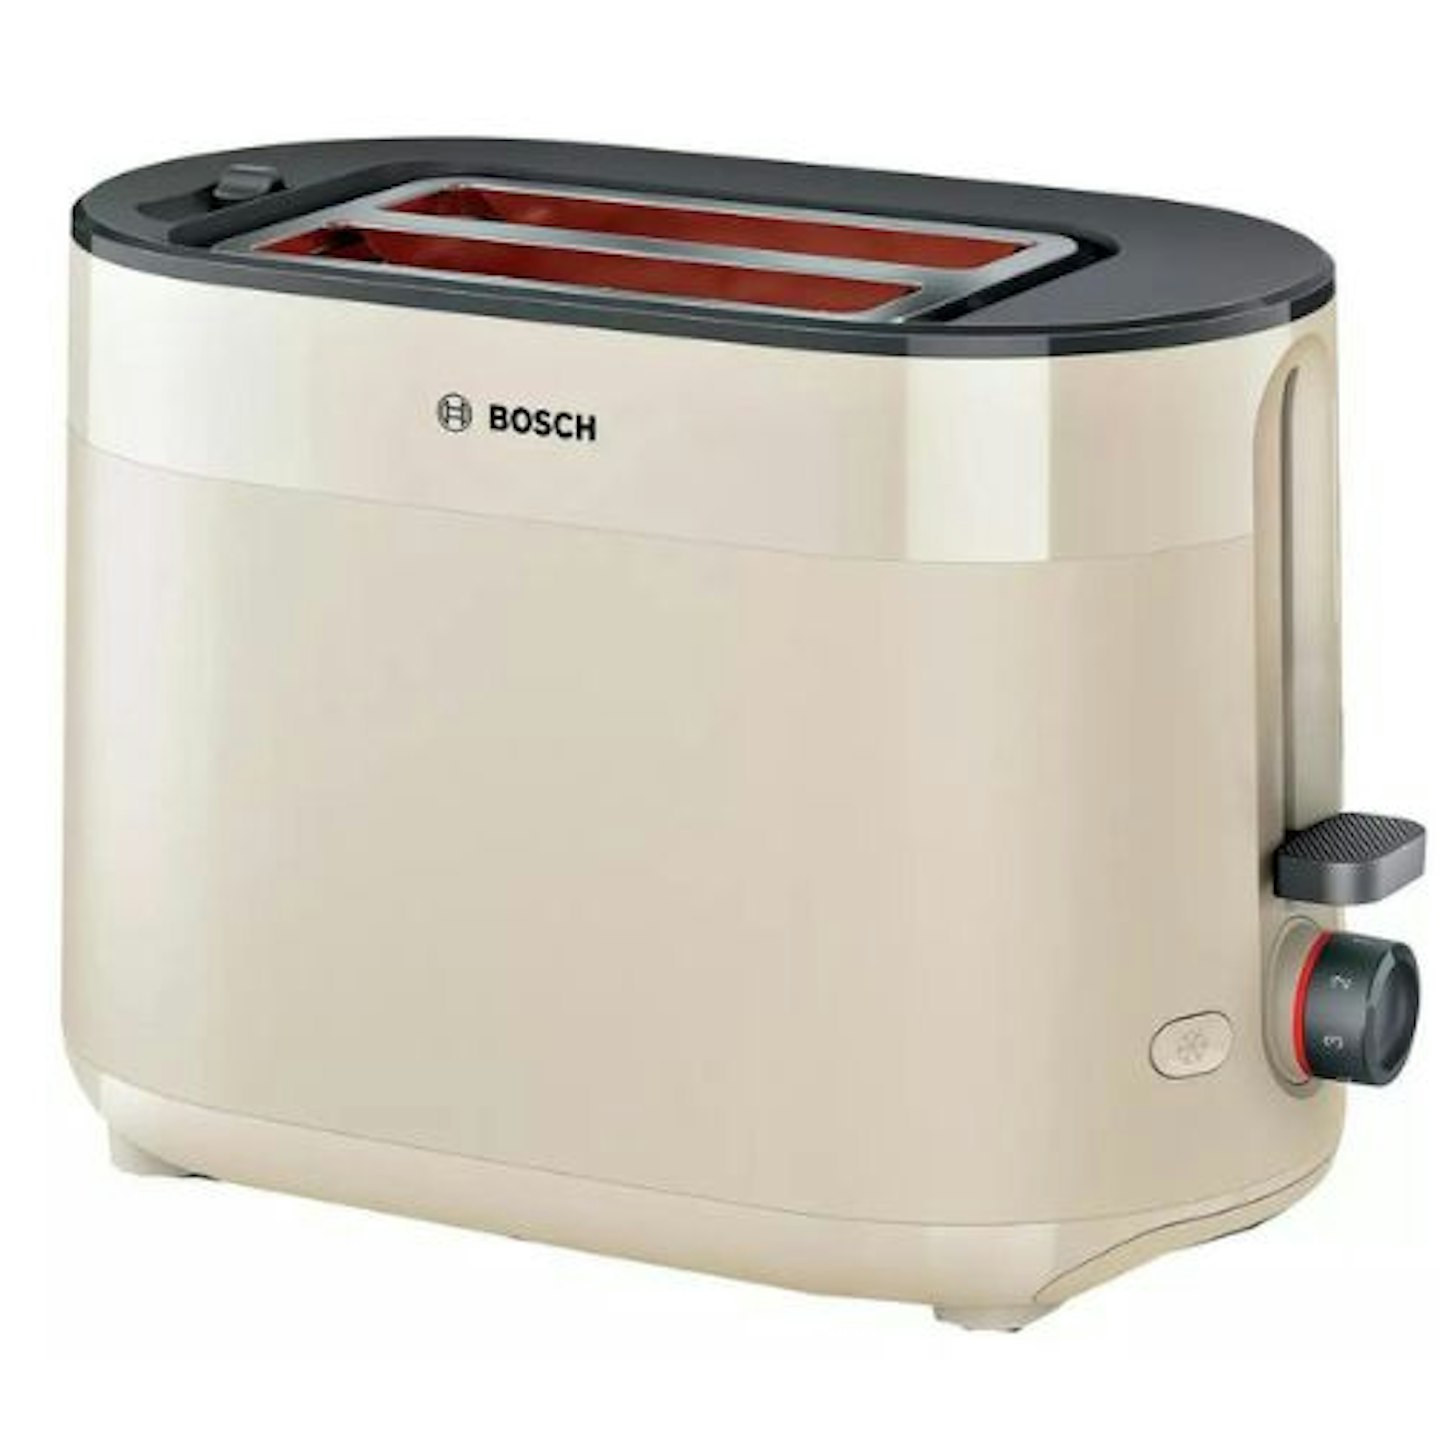 Bosch TAT2M127GB MyMoment Delight 2 Slice Toaster